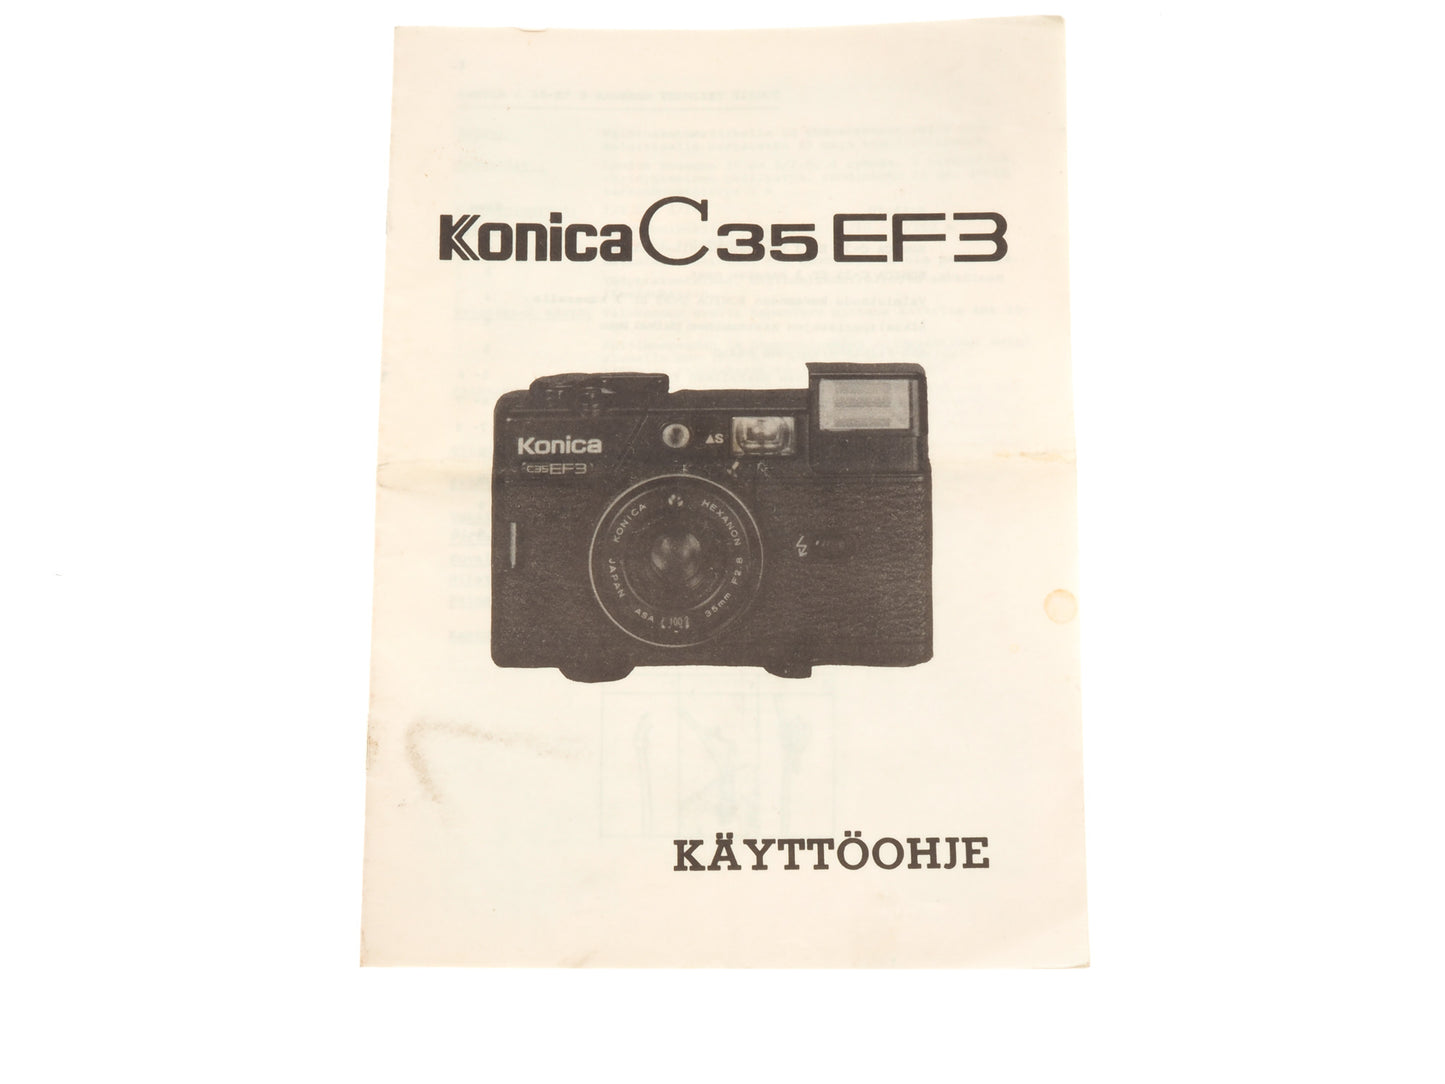 Konica C35 EF3 Instructions - Accessory